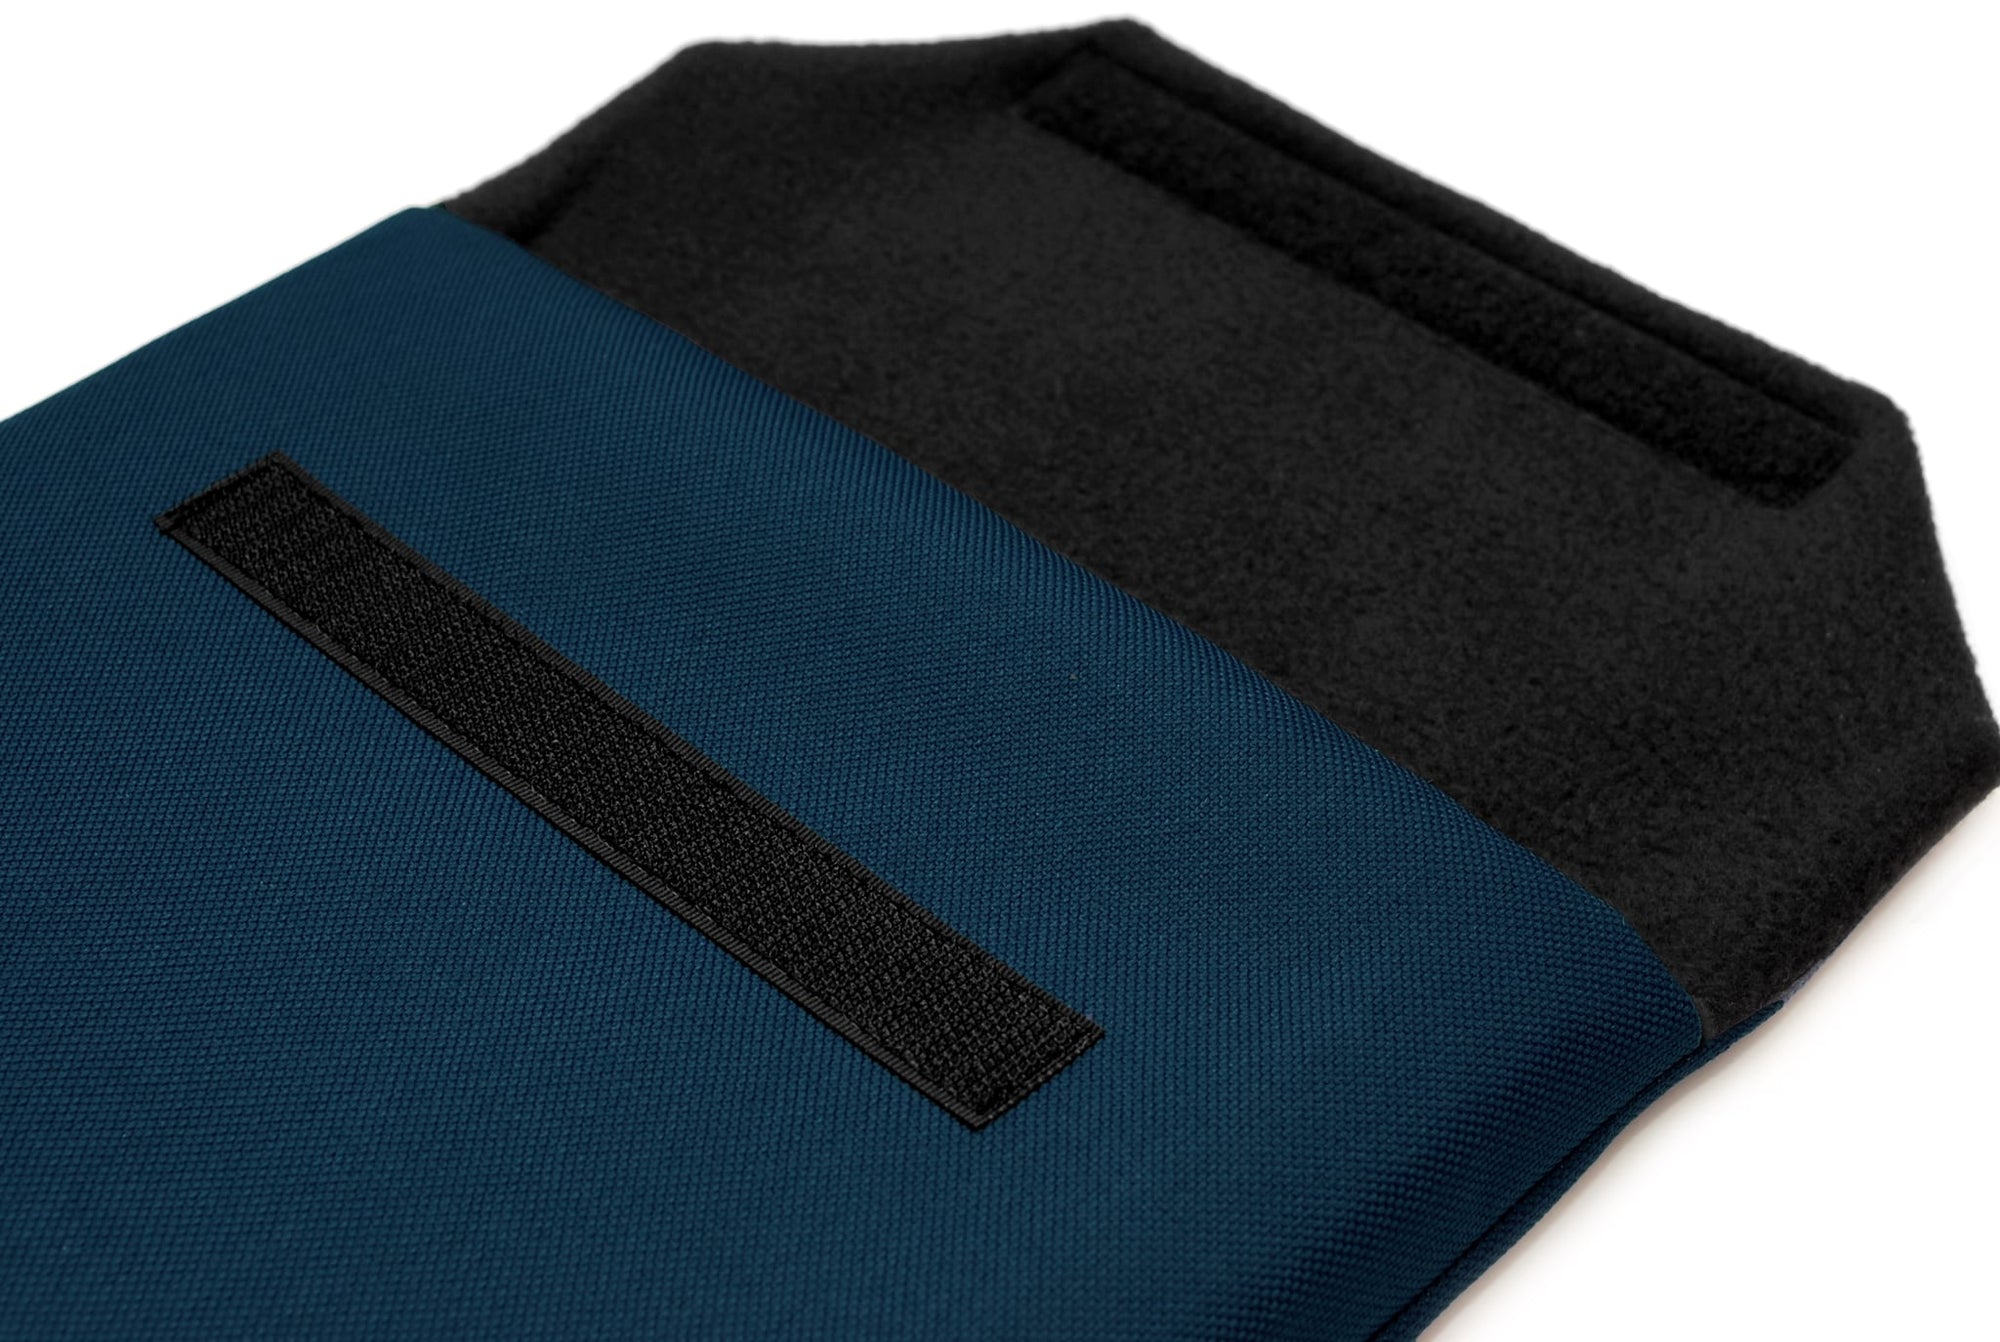 iPad Pro 11-inch Sleeve Case - Everyday Canvas